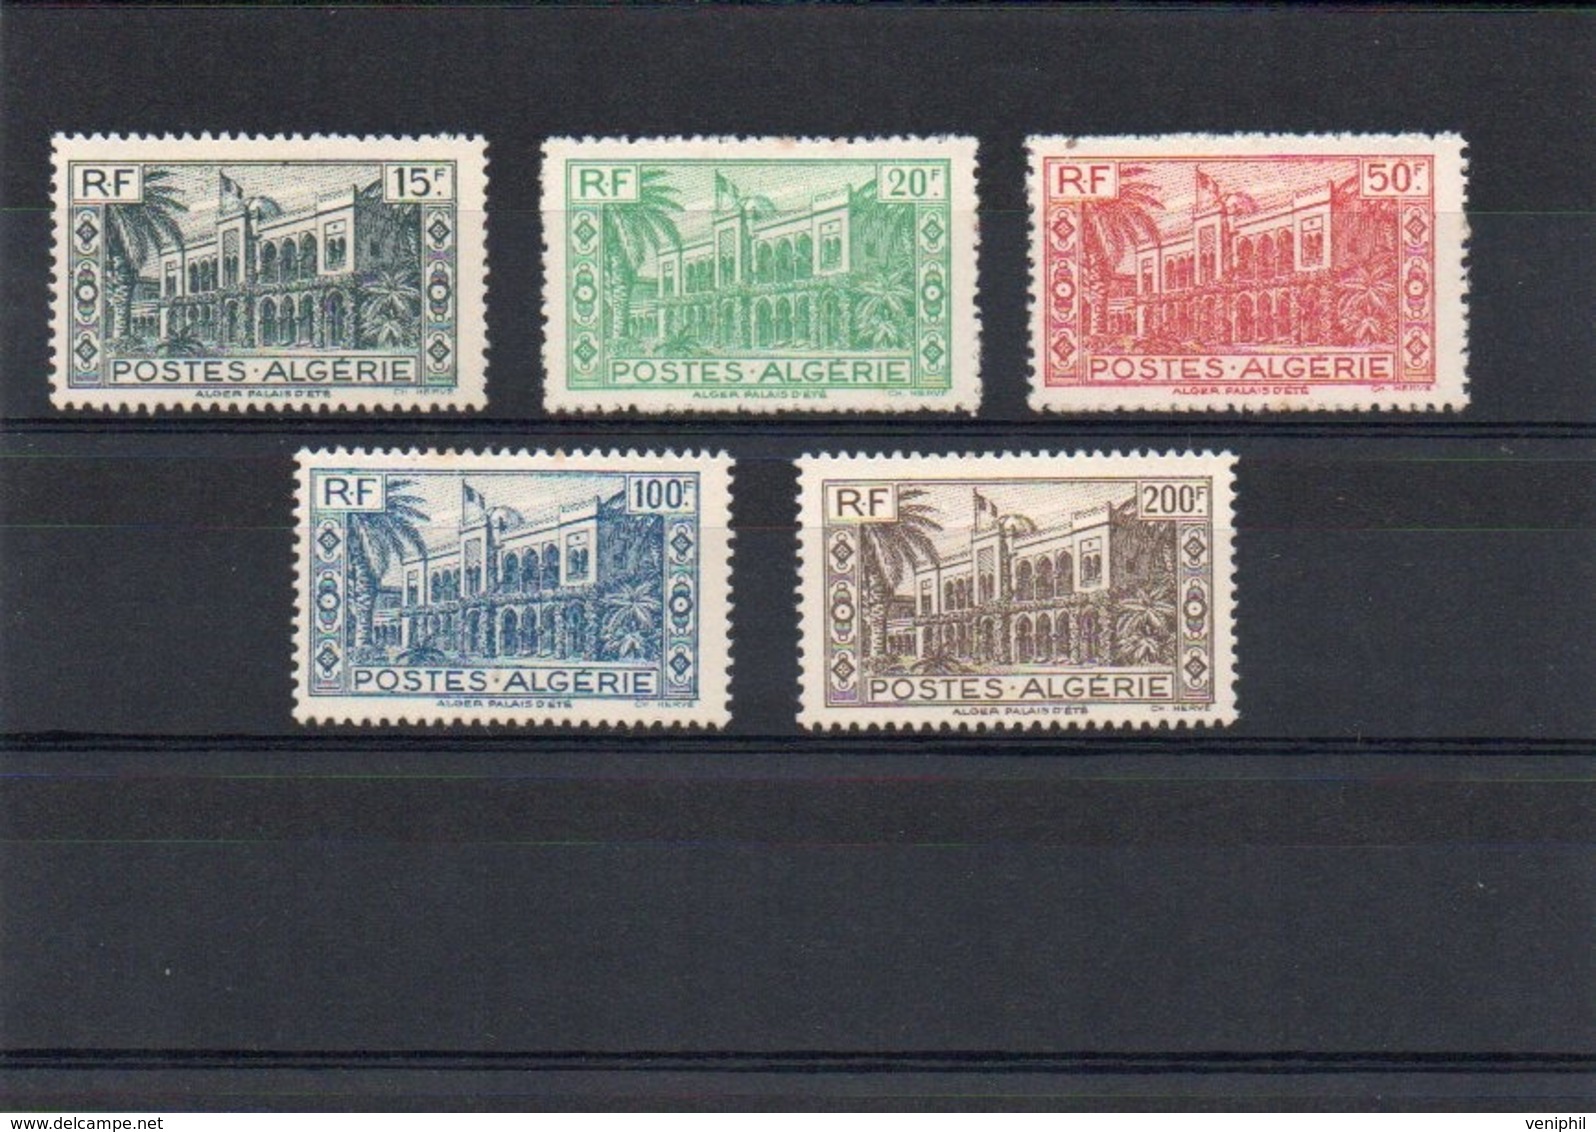 ALGERIE - SERIE N° 200 A 204 NEUVE CHARNIERE - ANNEE 1944 - Unused Stamps